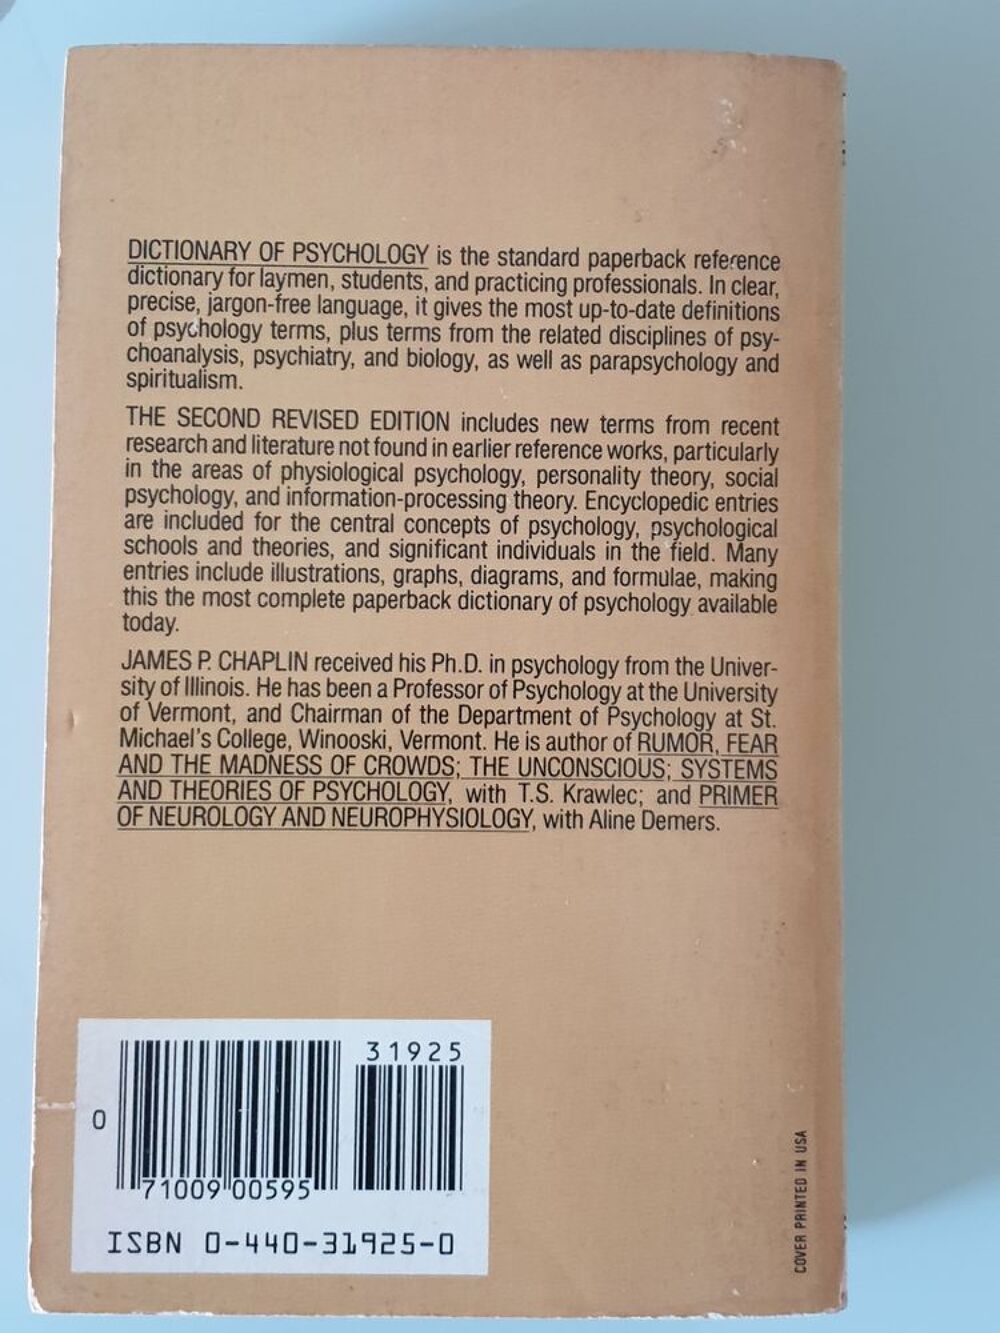 Dictionary of Psychology by J.P. Chaplin (Author)
Marseille Livres et BD